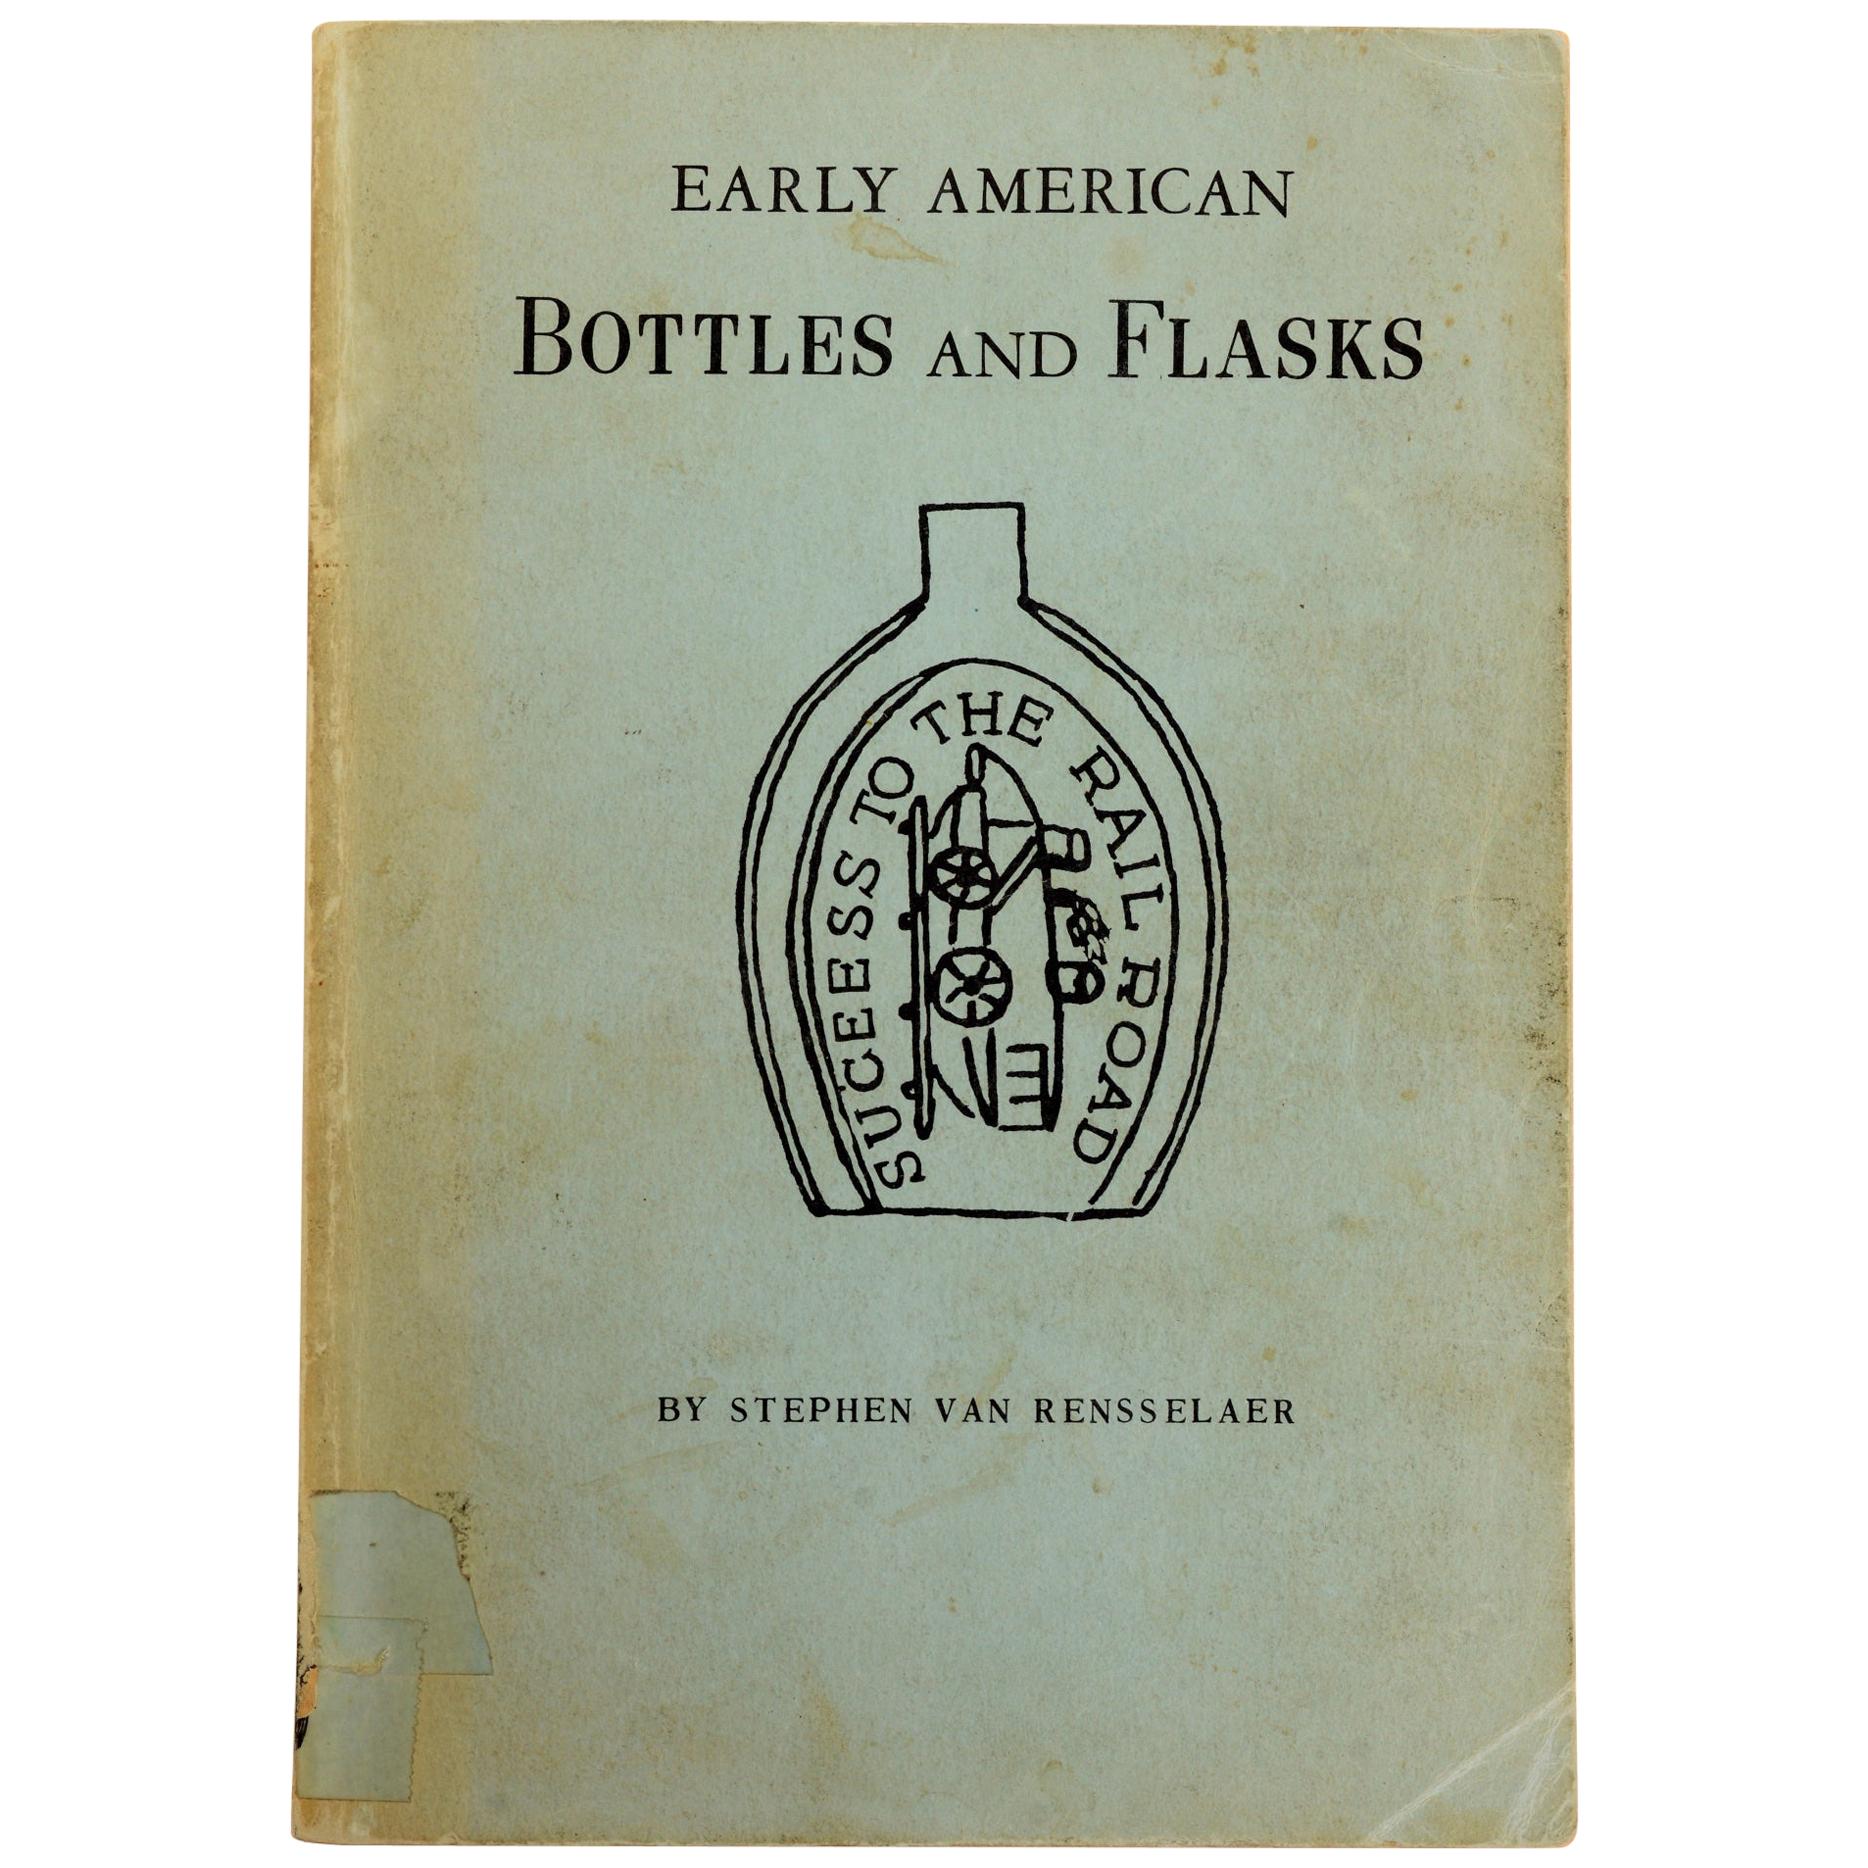 Check List of Early American Bottles And Flasks by Stephen Van Rensselaer